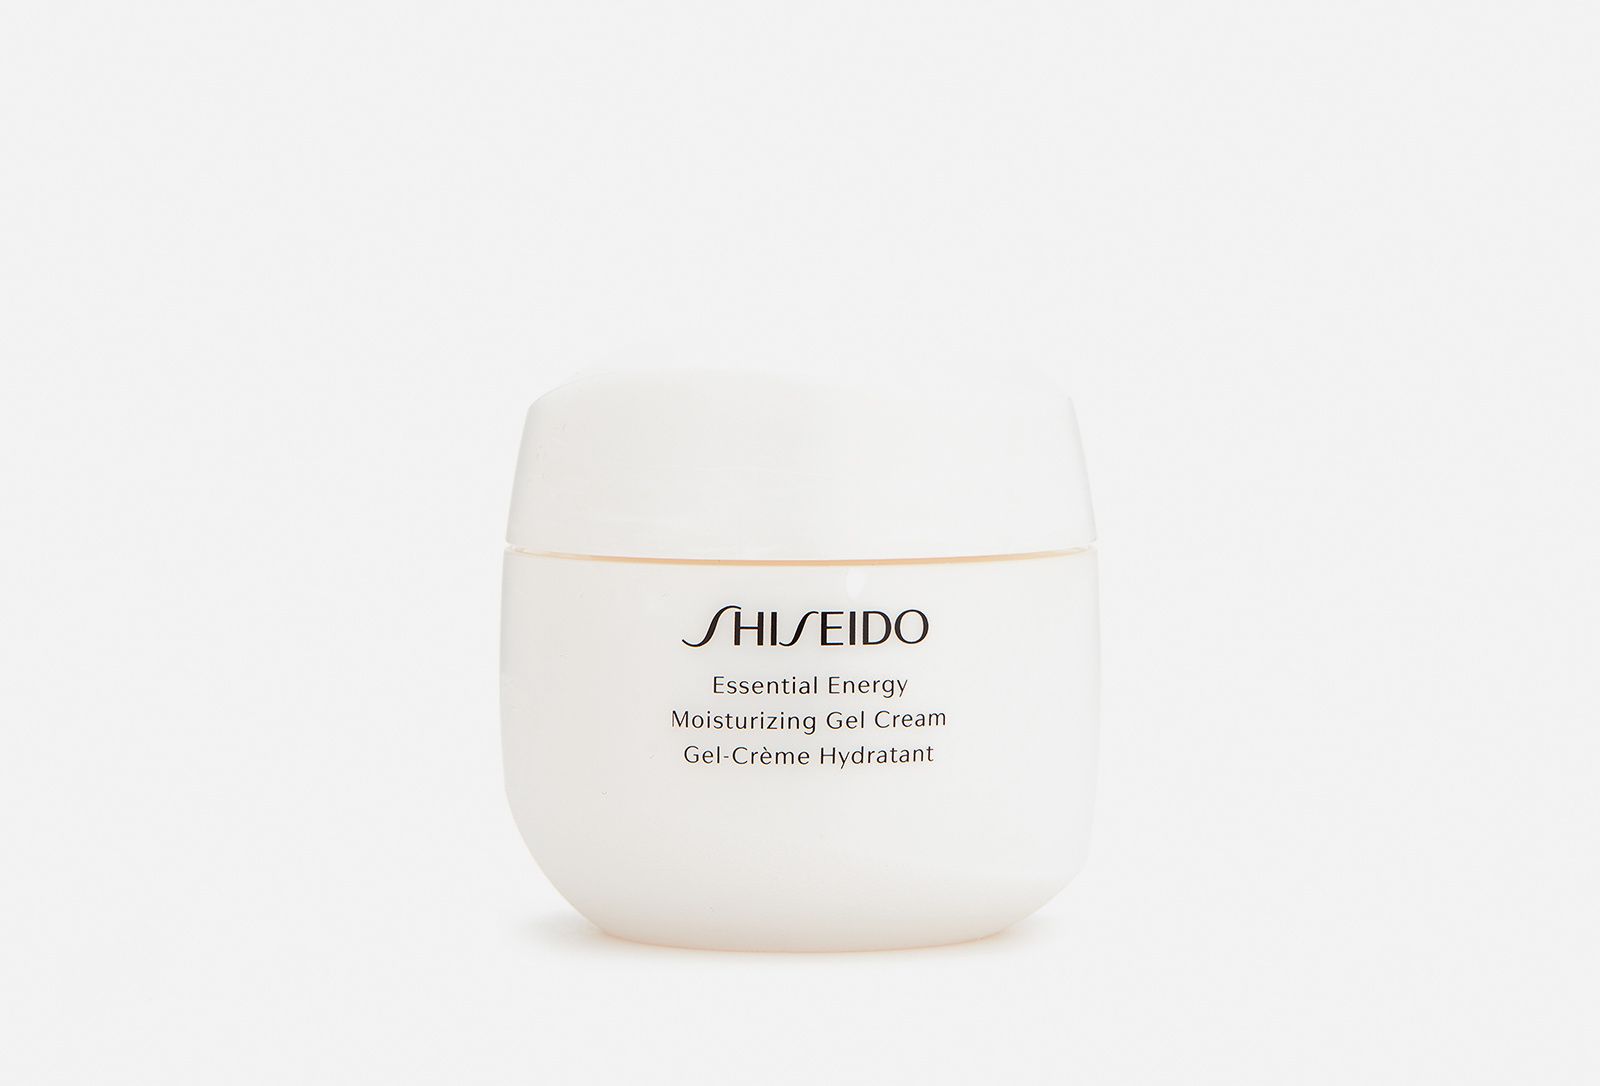 Shiseido essential energy. Шисейдо Essential Energy Hydrating Cream. Shiseido Essential Energy Cream. Shiseido Essential Energy Moisturizing Cream. Shiseido Essential Energy Moisturizing Gel Cream.